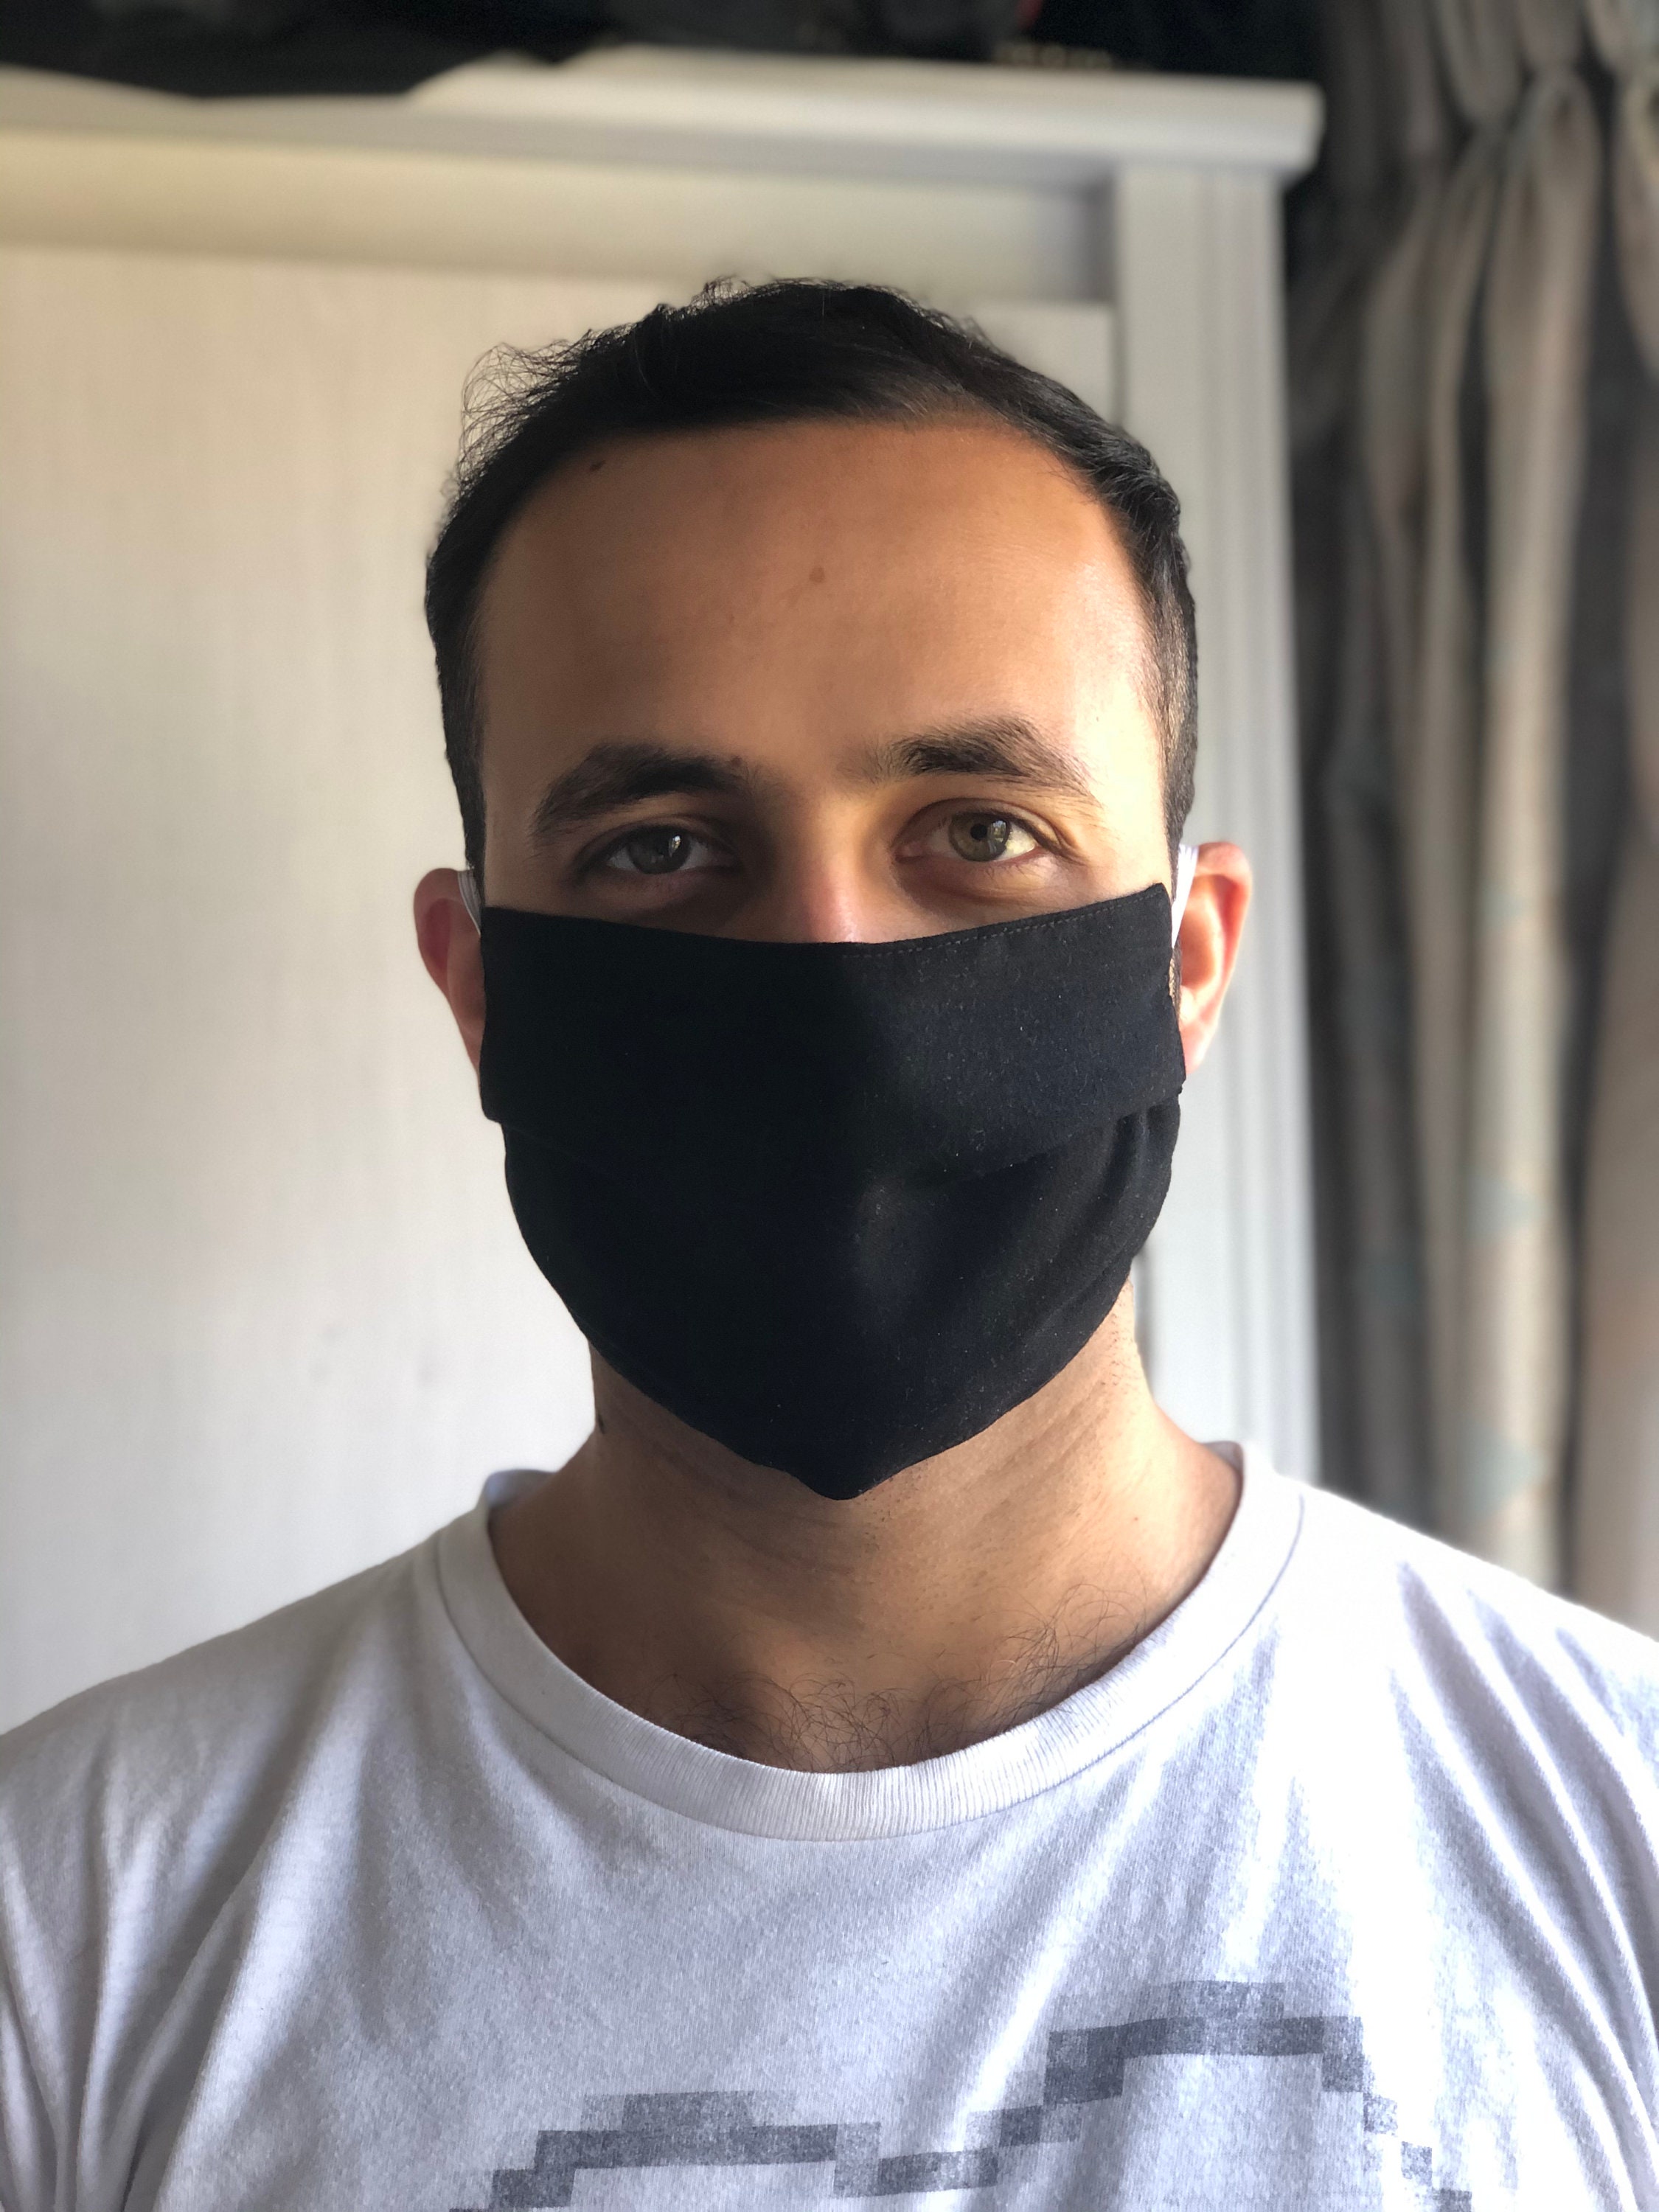 Chad Flag Unisex Cloth Face Masks Reusable Washable Ajustable Masks with  Filters Black